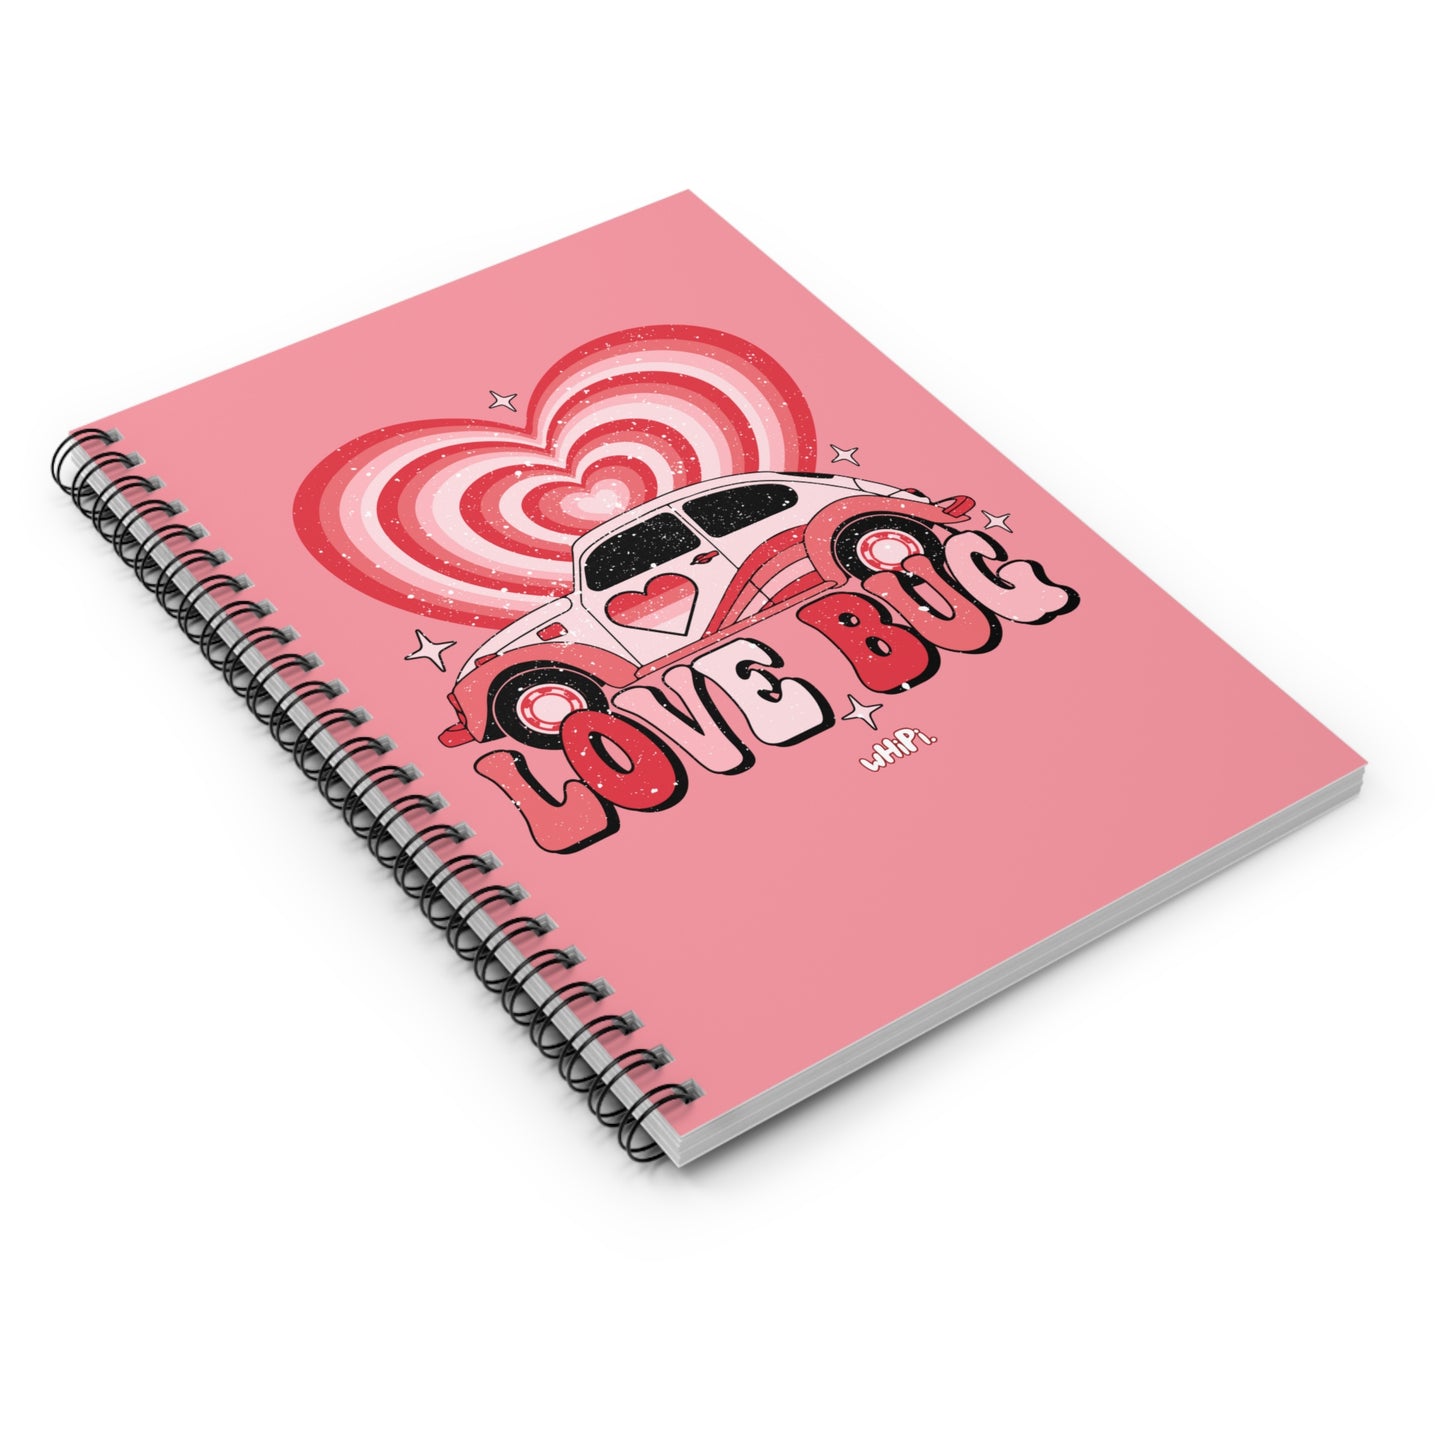 Love Bug Journal Spiral Notebook - Ruled Line